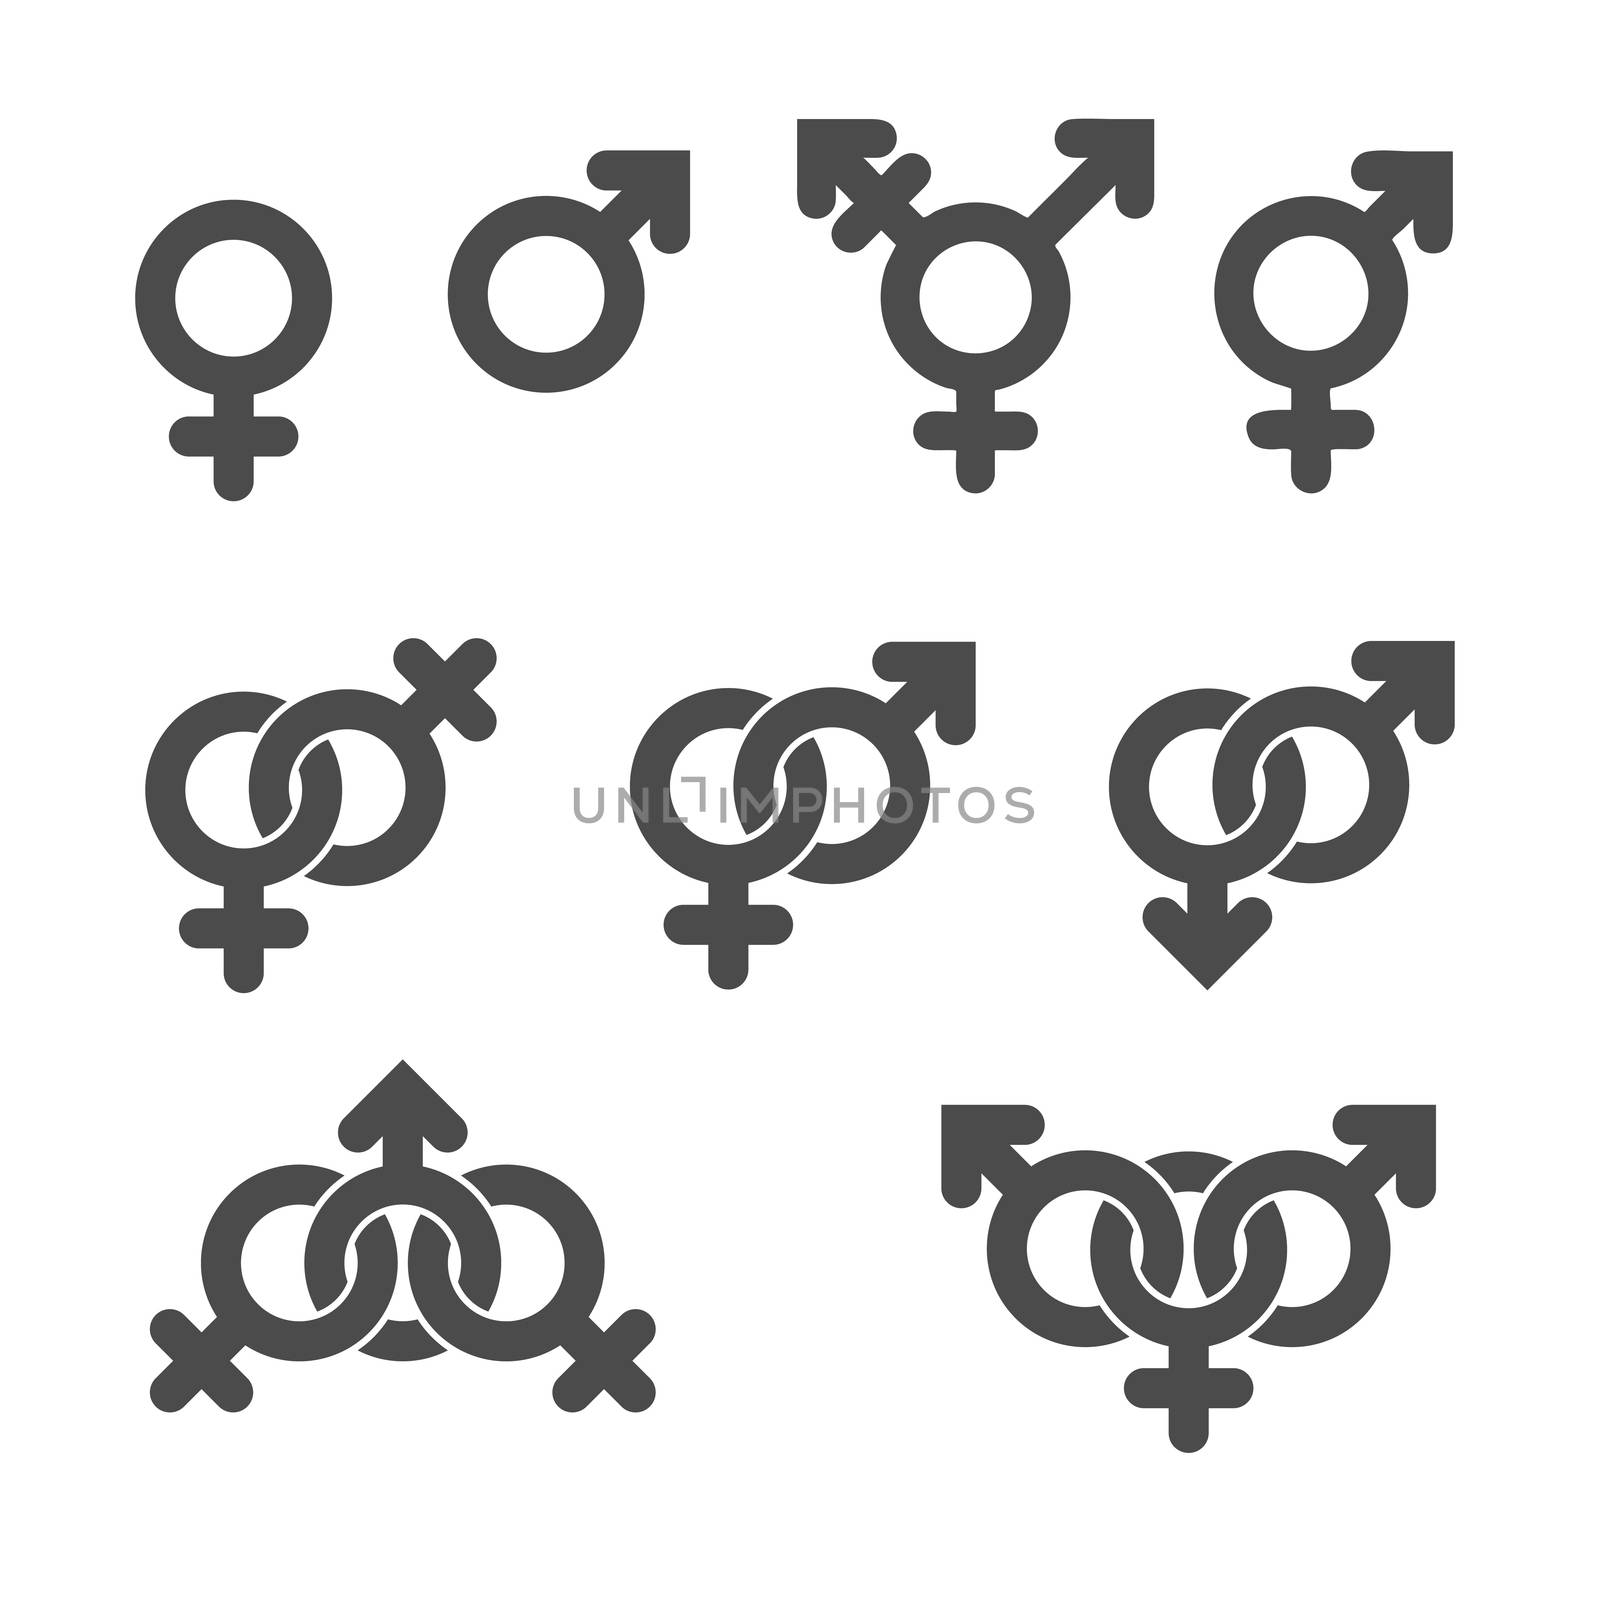 Gender symbol icons. by smoki